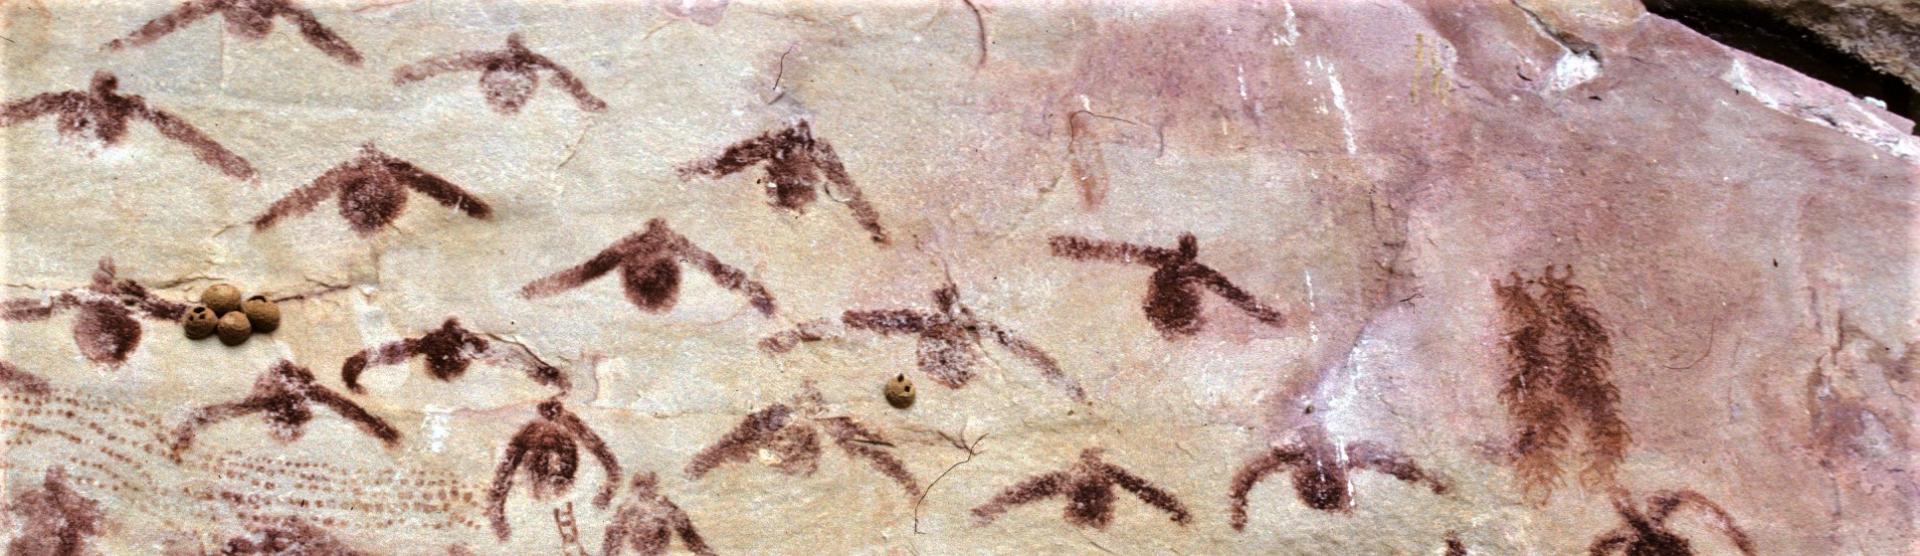 pinturas rupestres Amazonia